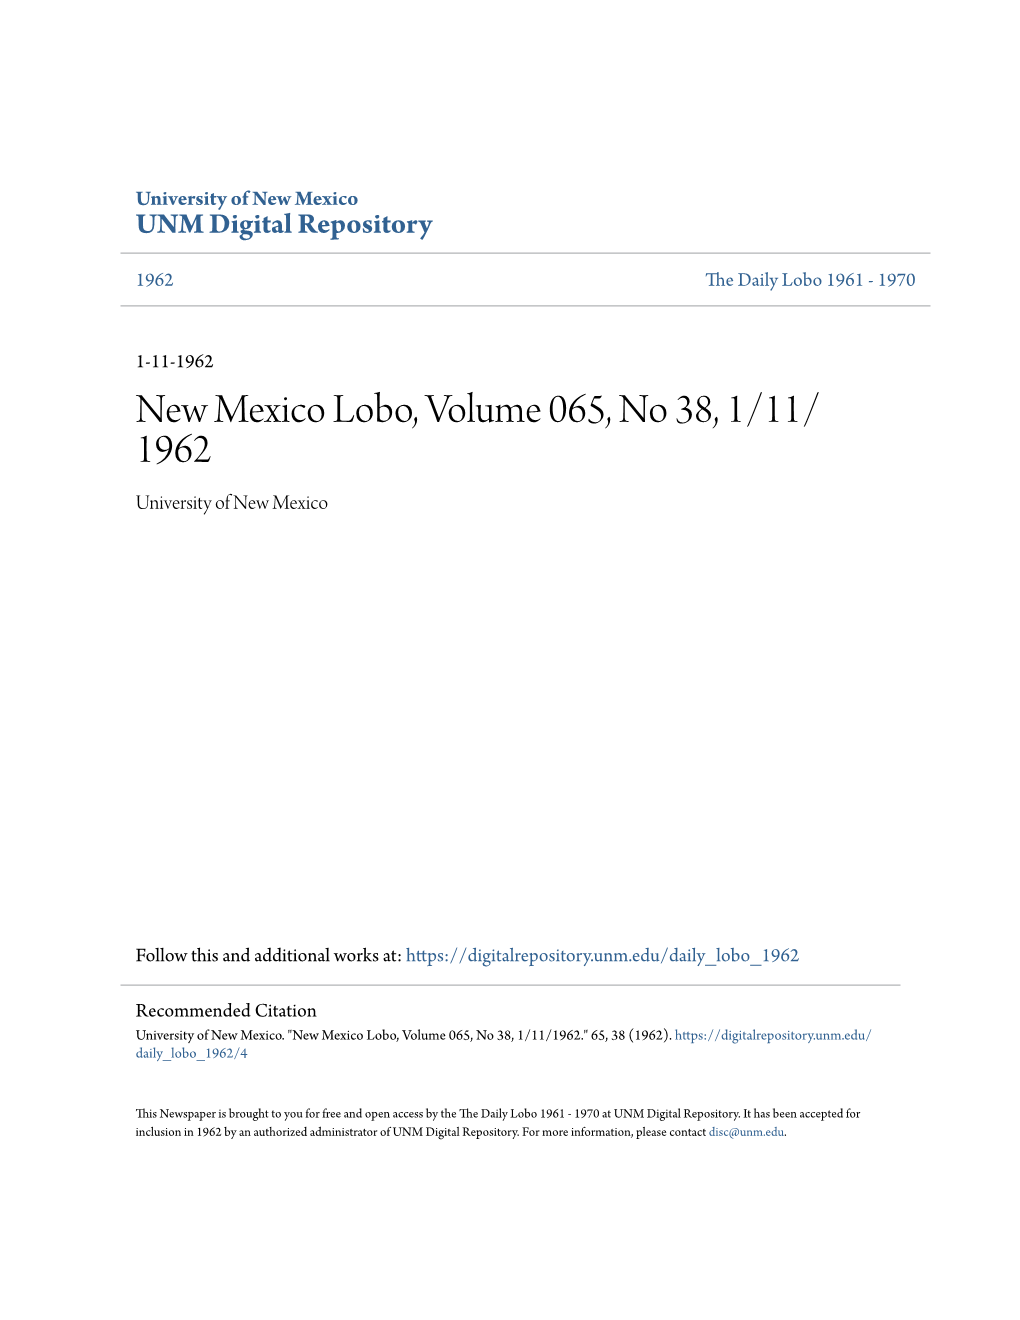 New Mexico Lobo, Volume 065, No 38, 1/11/1962." 65, 38 (1962)